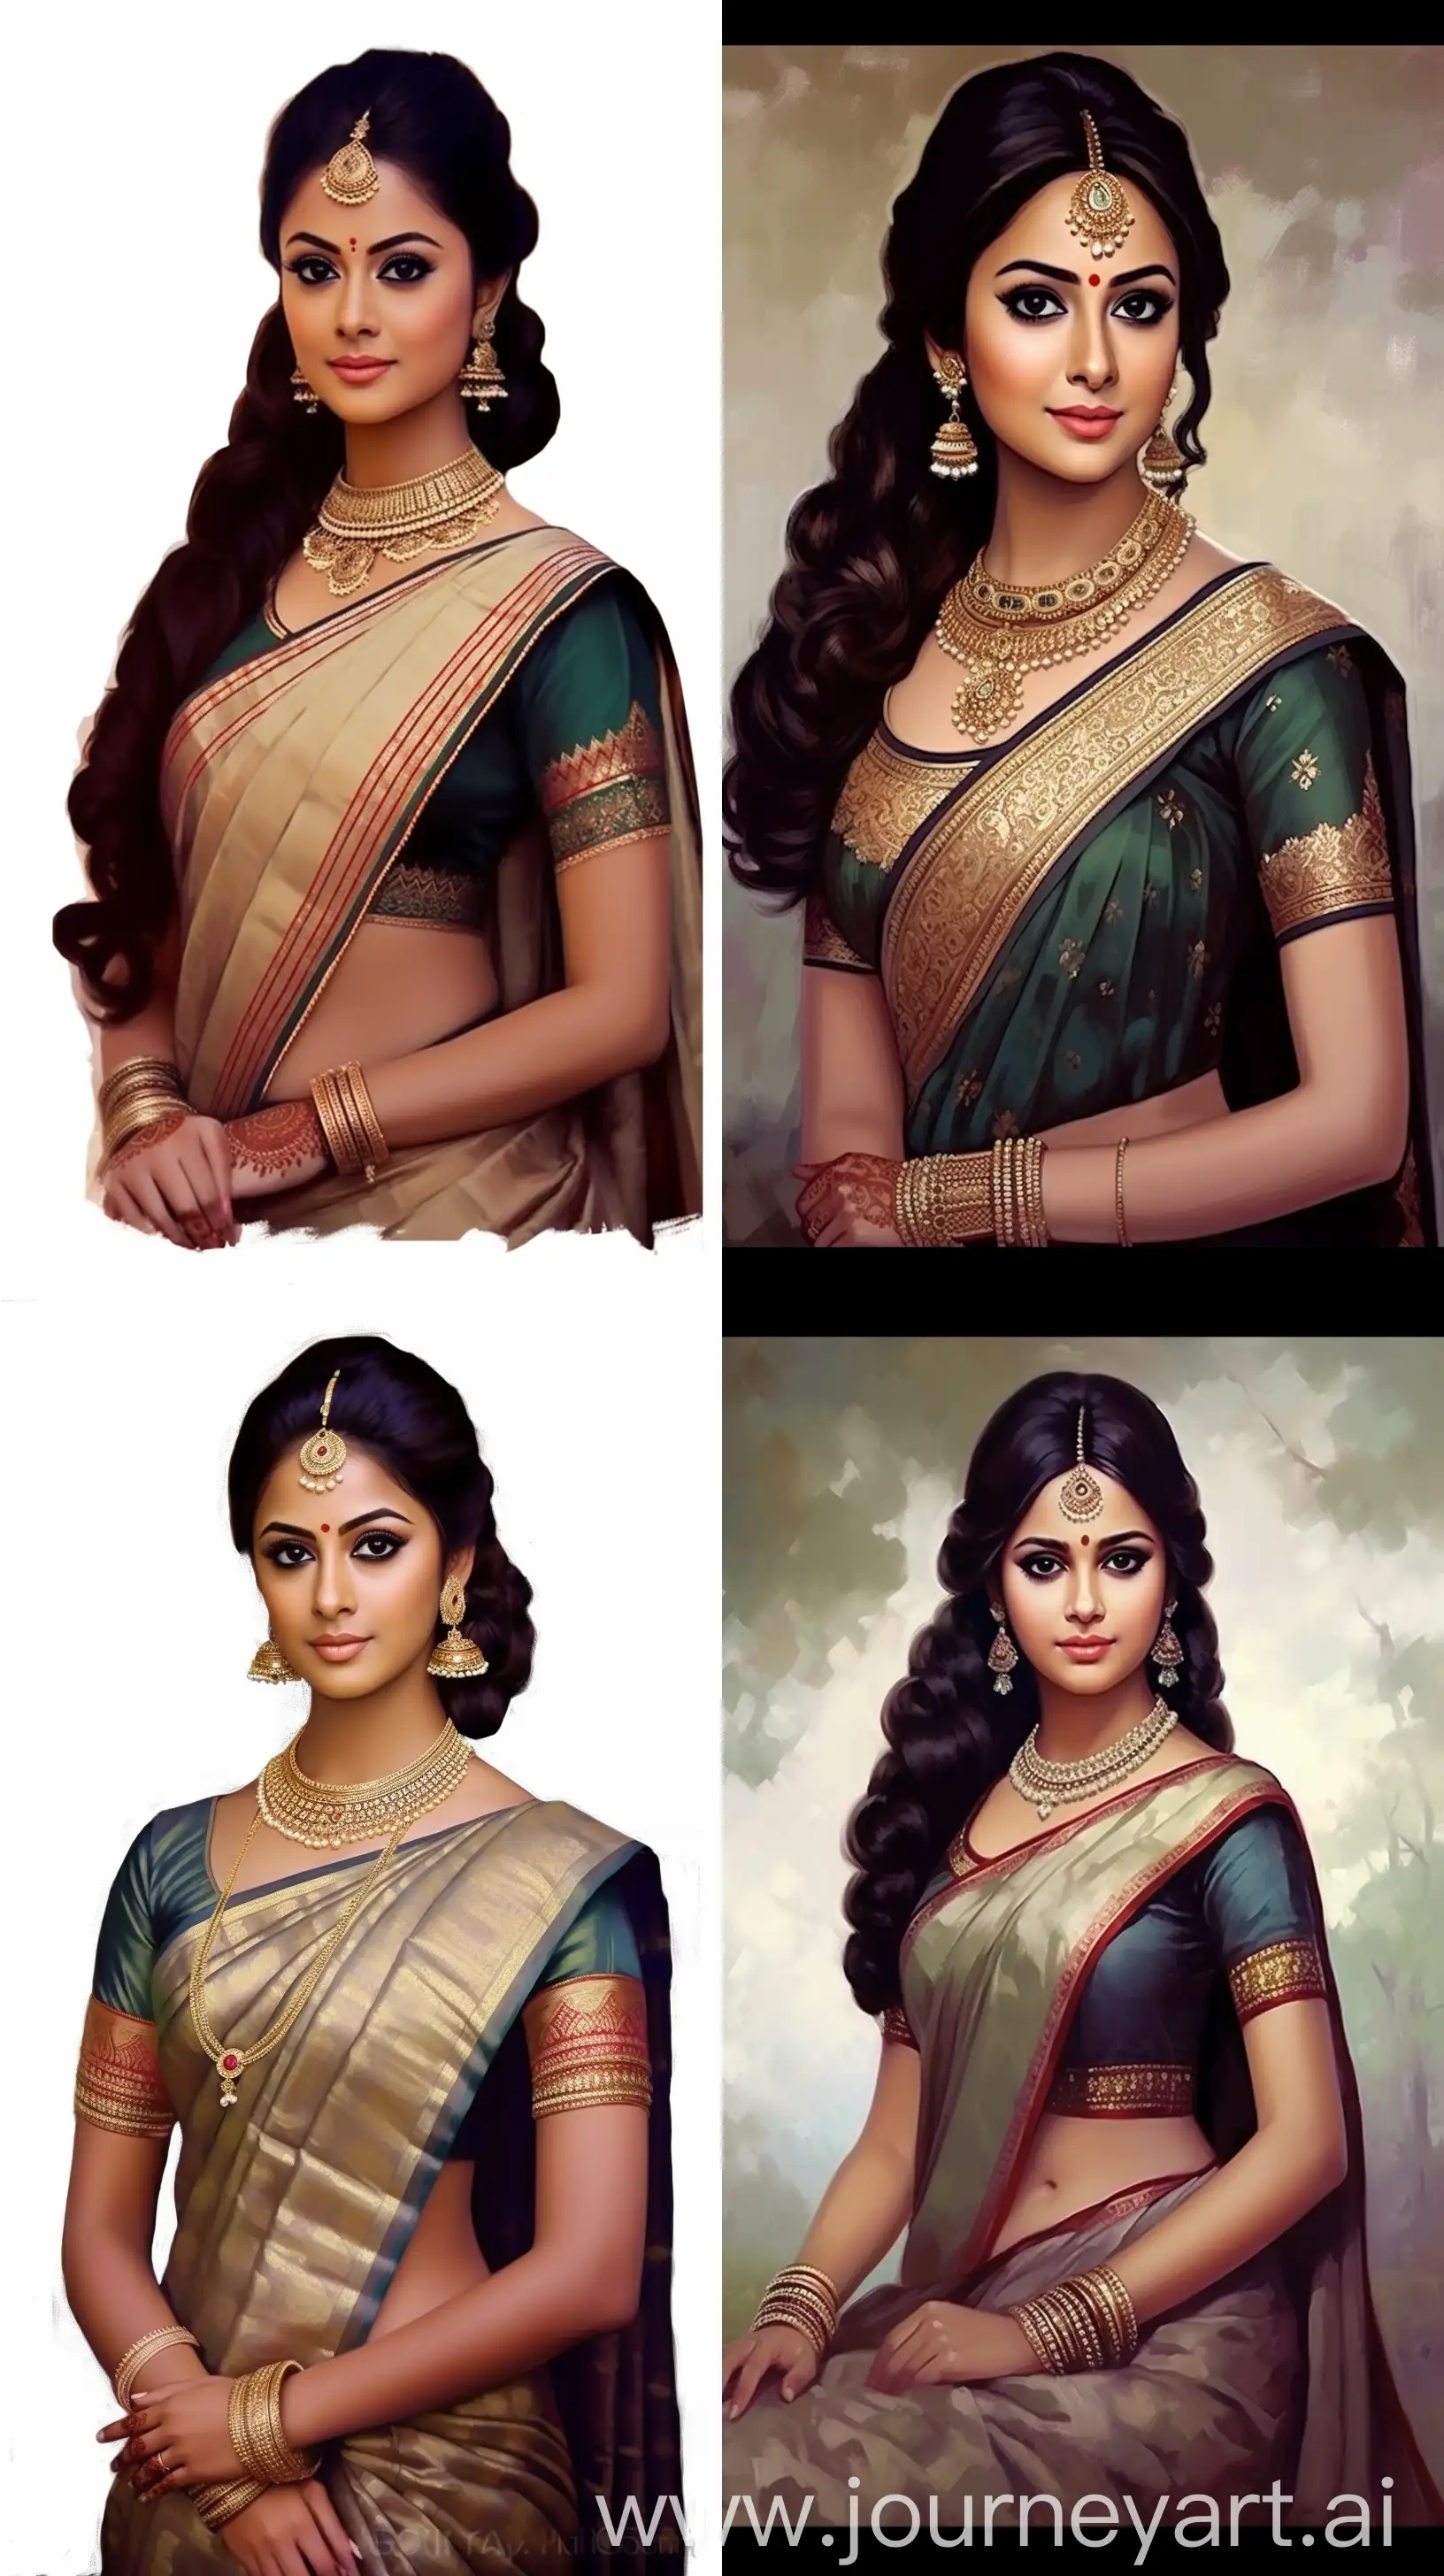 Elegant-Indian-Woman-in-Traditional-Saree-Exquisite-Details-in-Raj-Ravi-Varma-Style